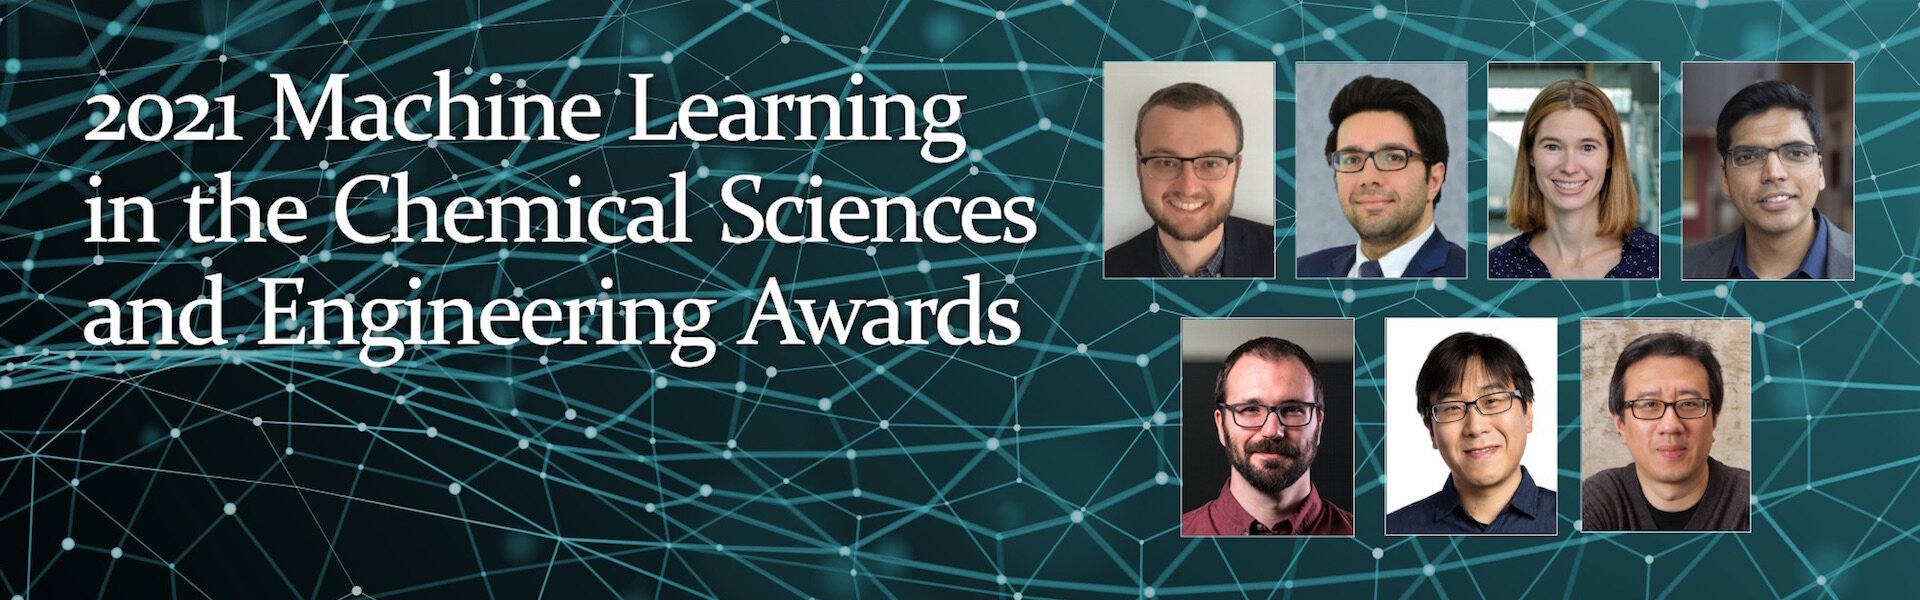 Sriram wins Machine Learning Award from Dreyfus Foundation